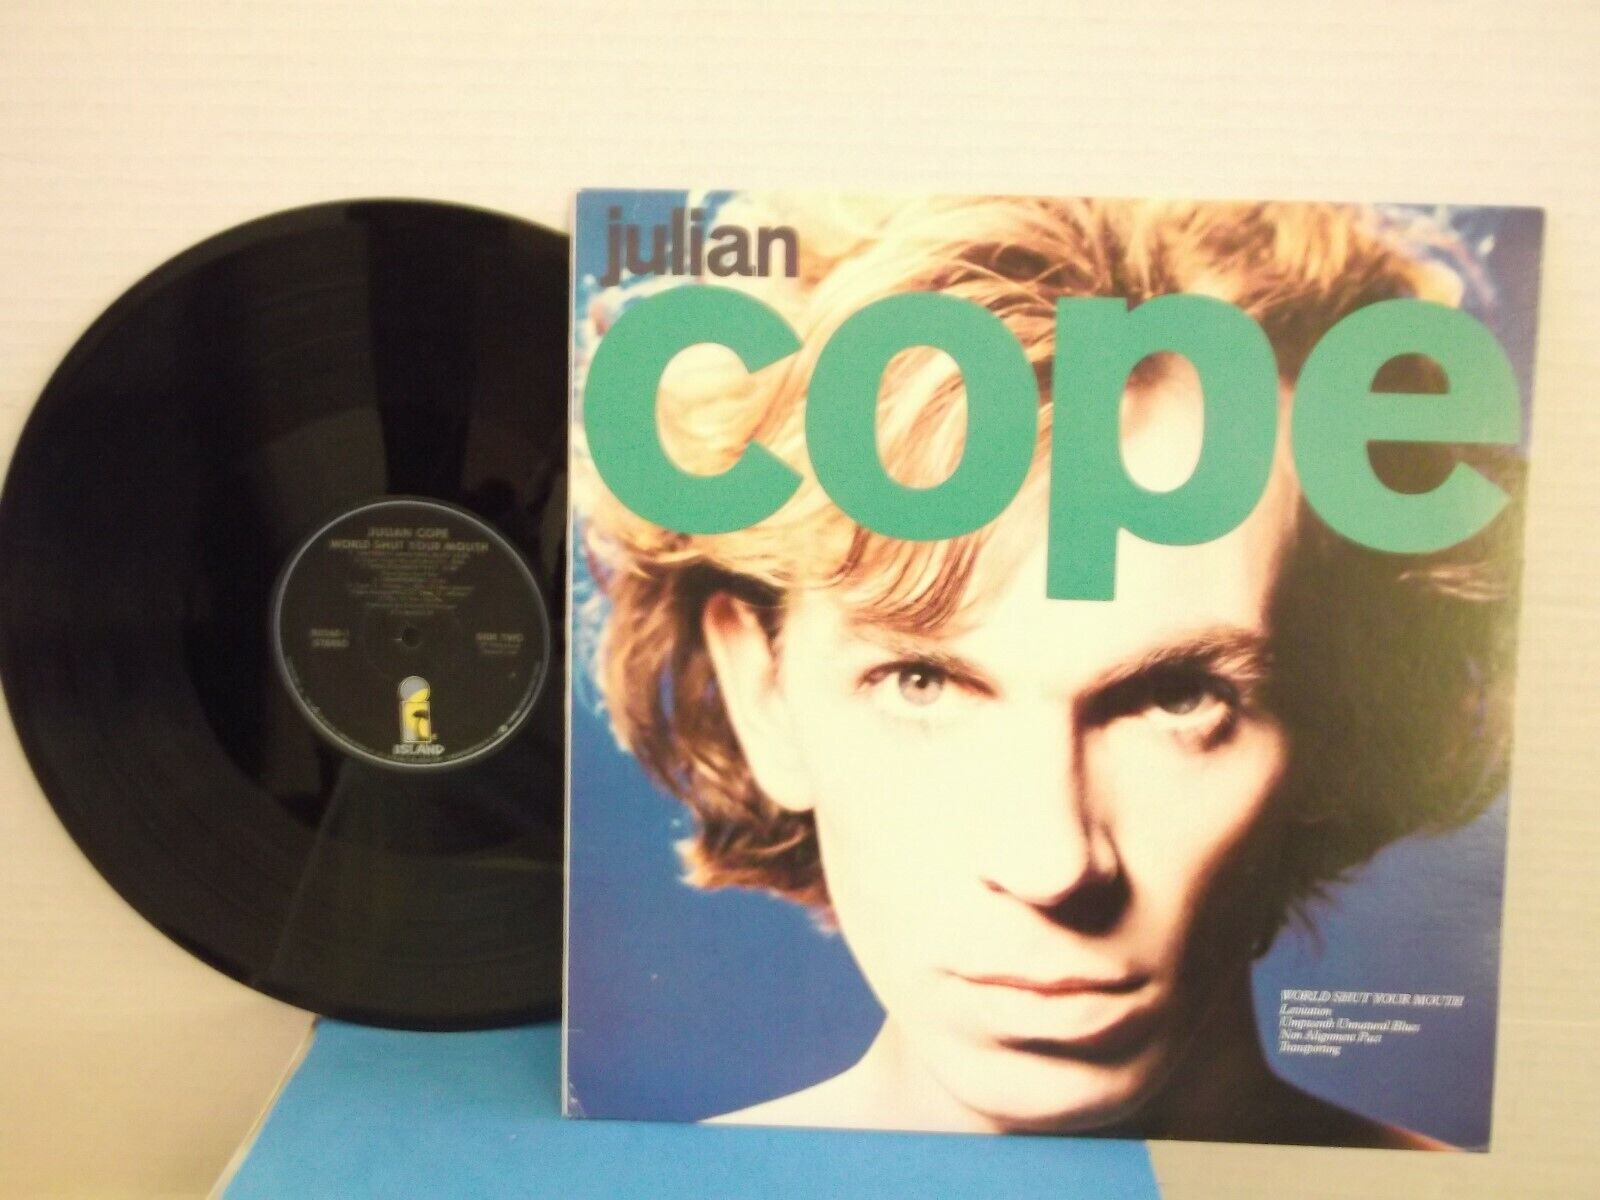 Julian Cope,Island,"World Shut Your Mouth",US,LP,stereo,1986 alt. rock, MINT